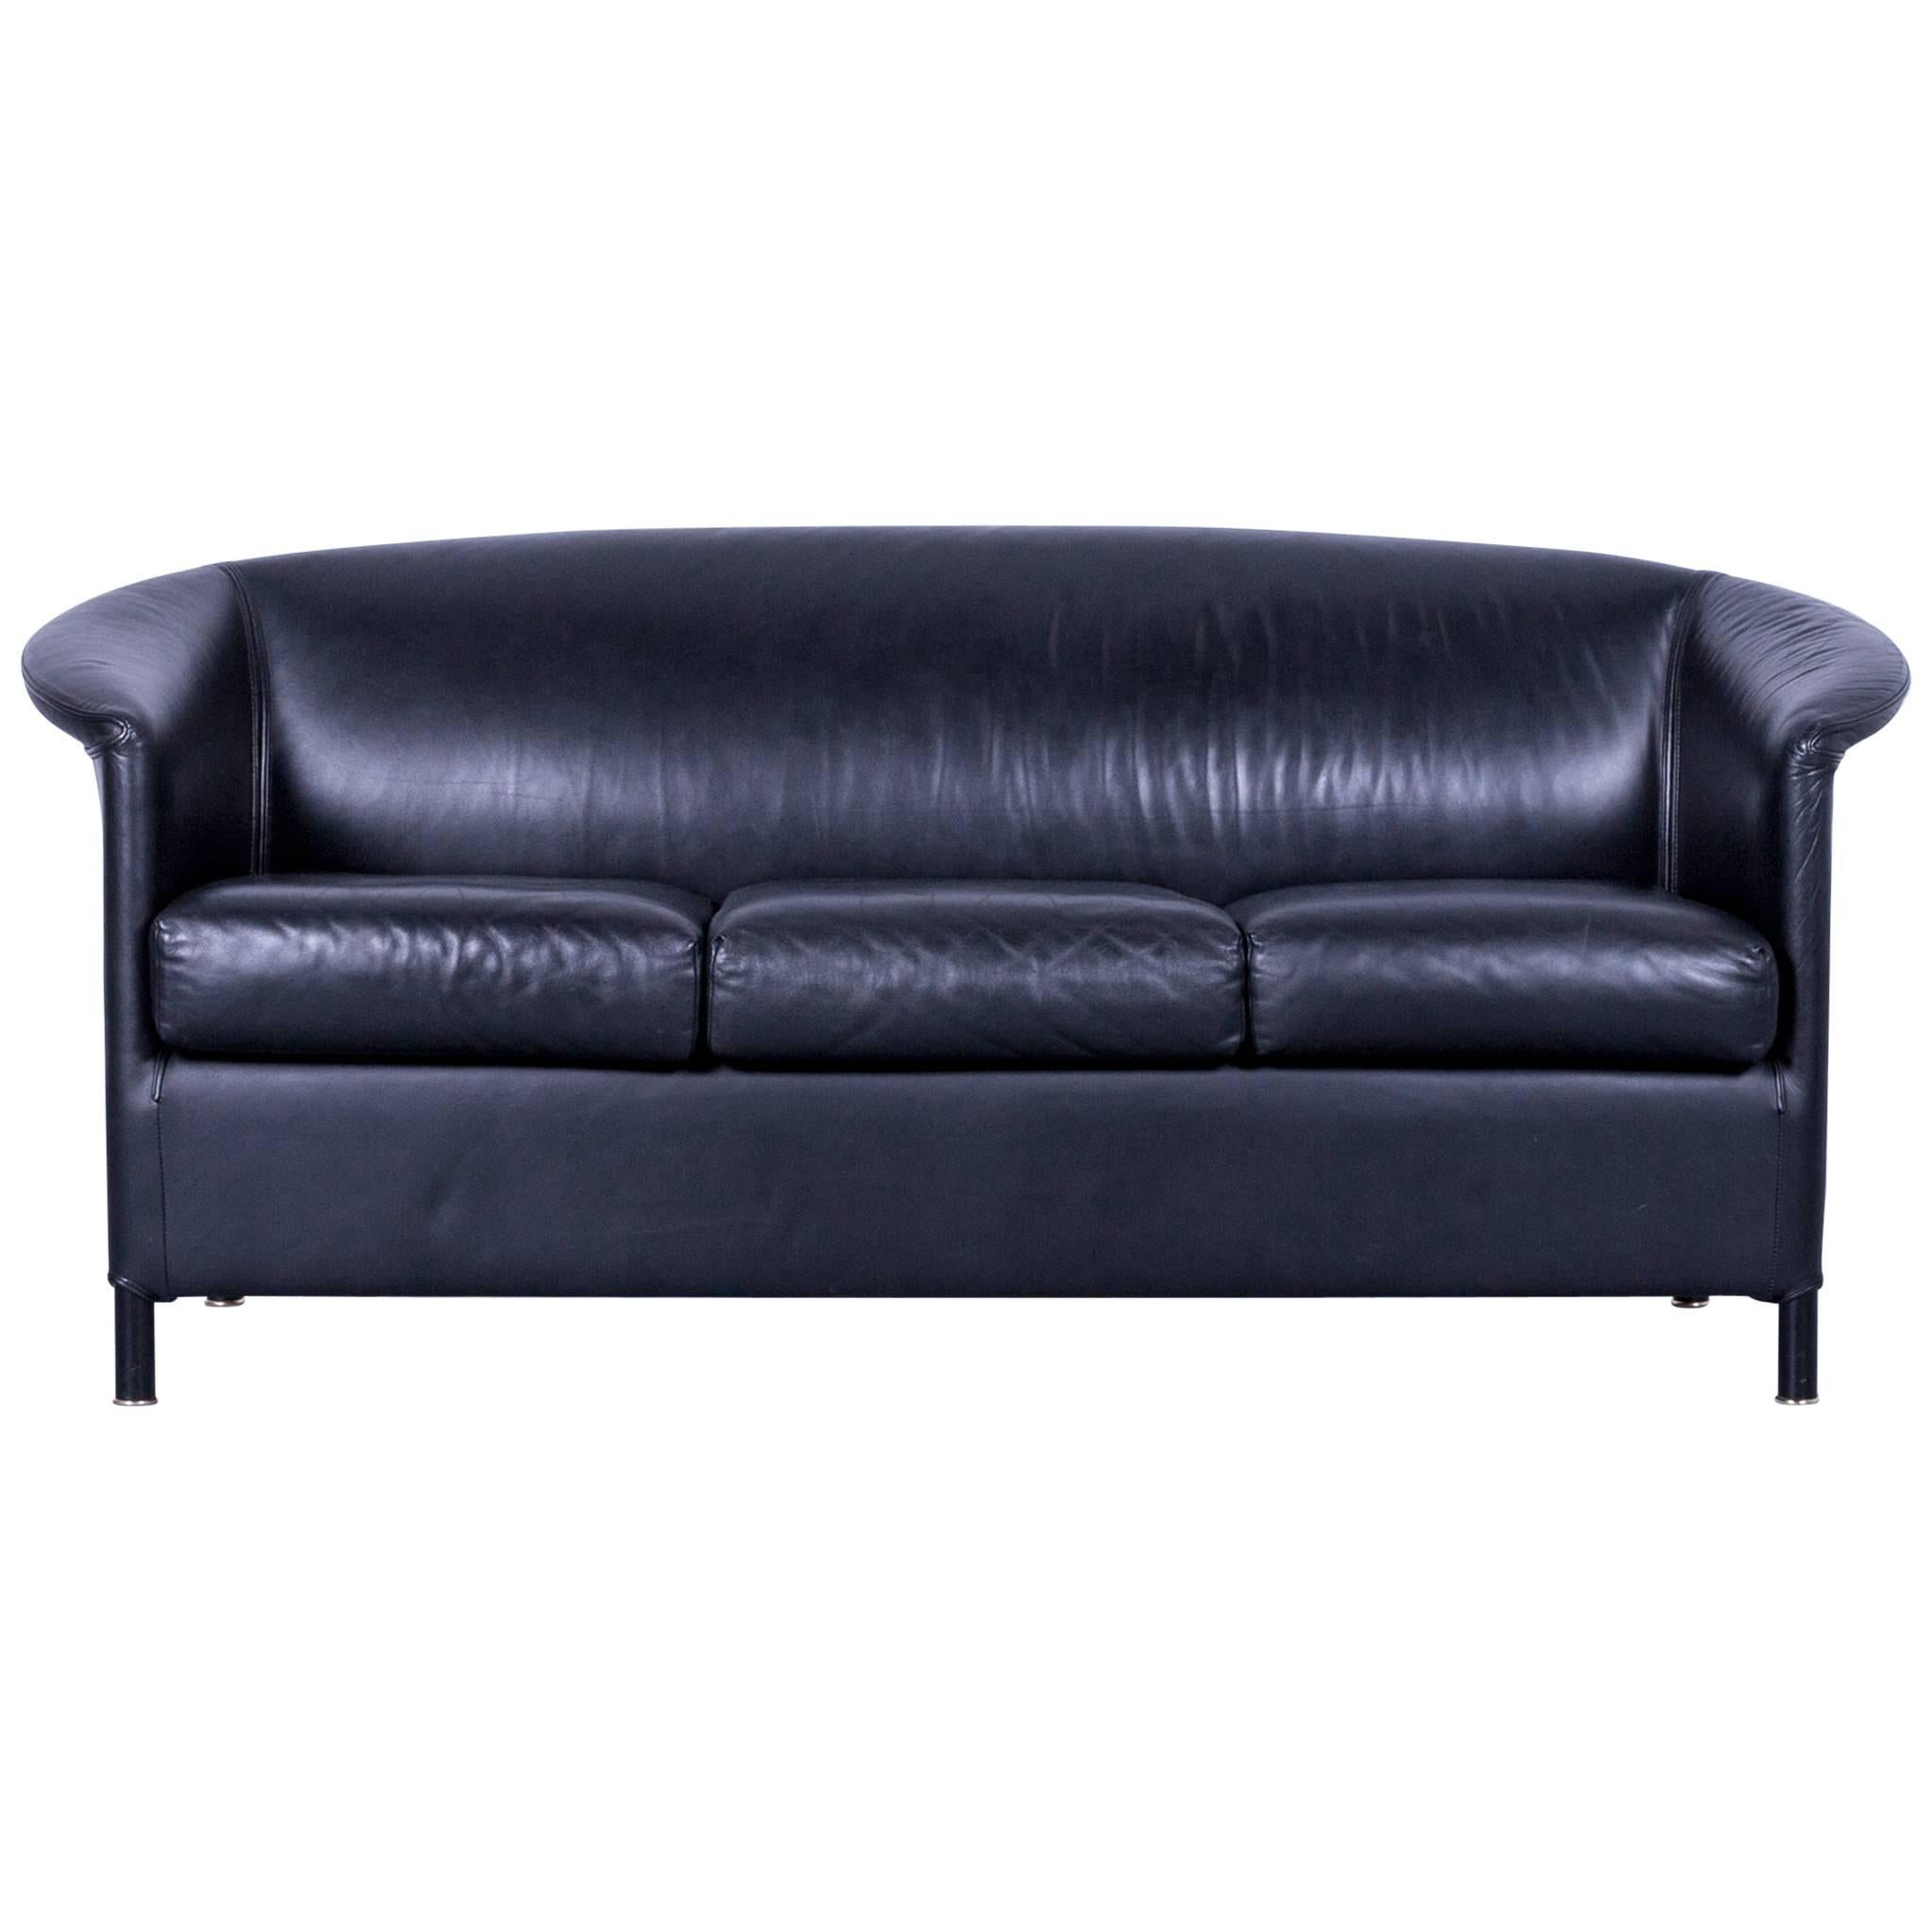 Wittmann Aura Designer Black Leather Three-Seater Sofa or Couch